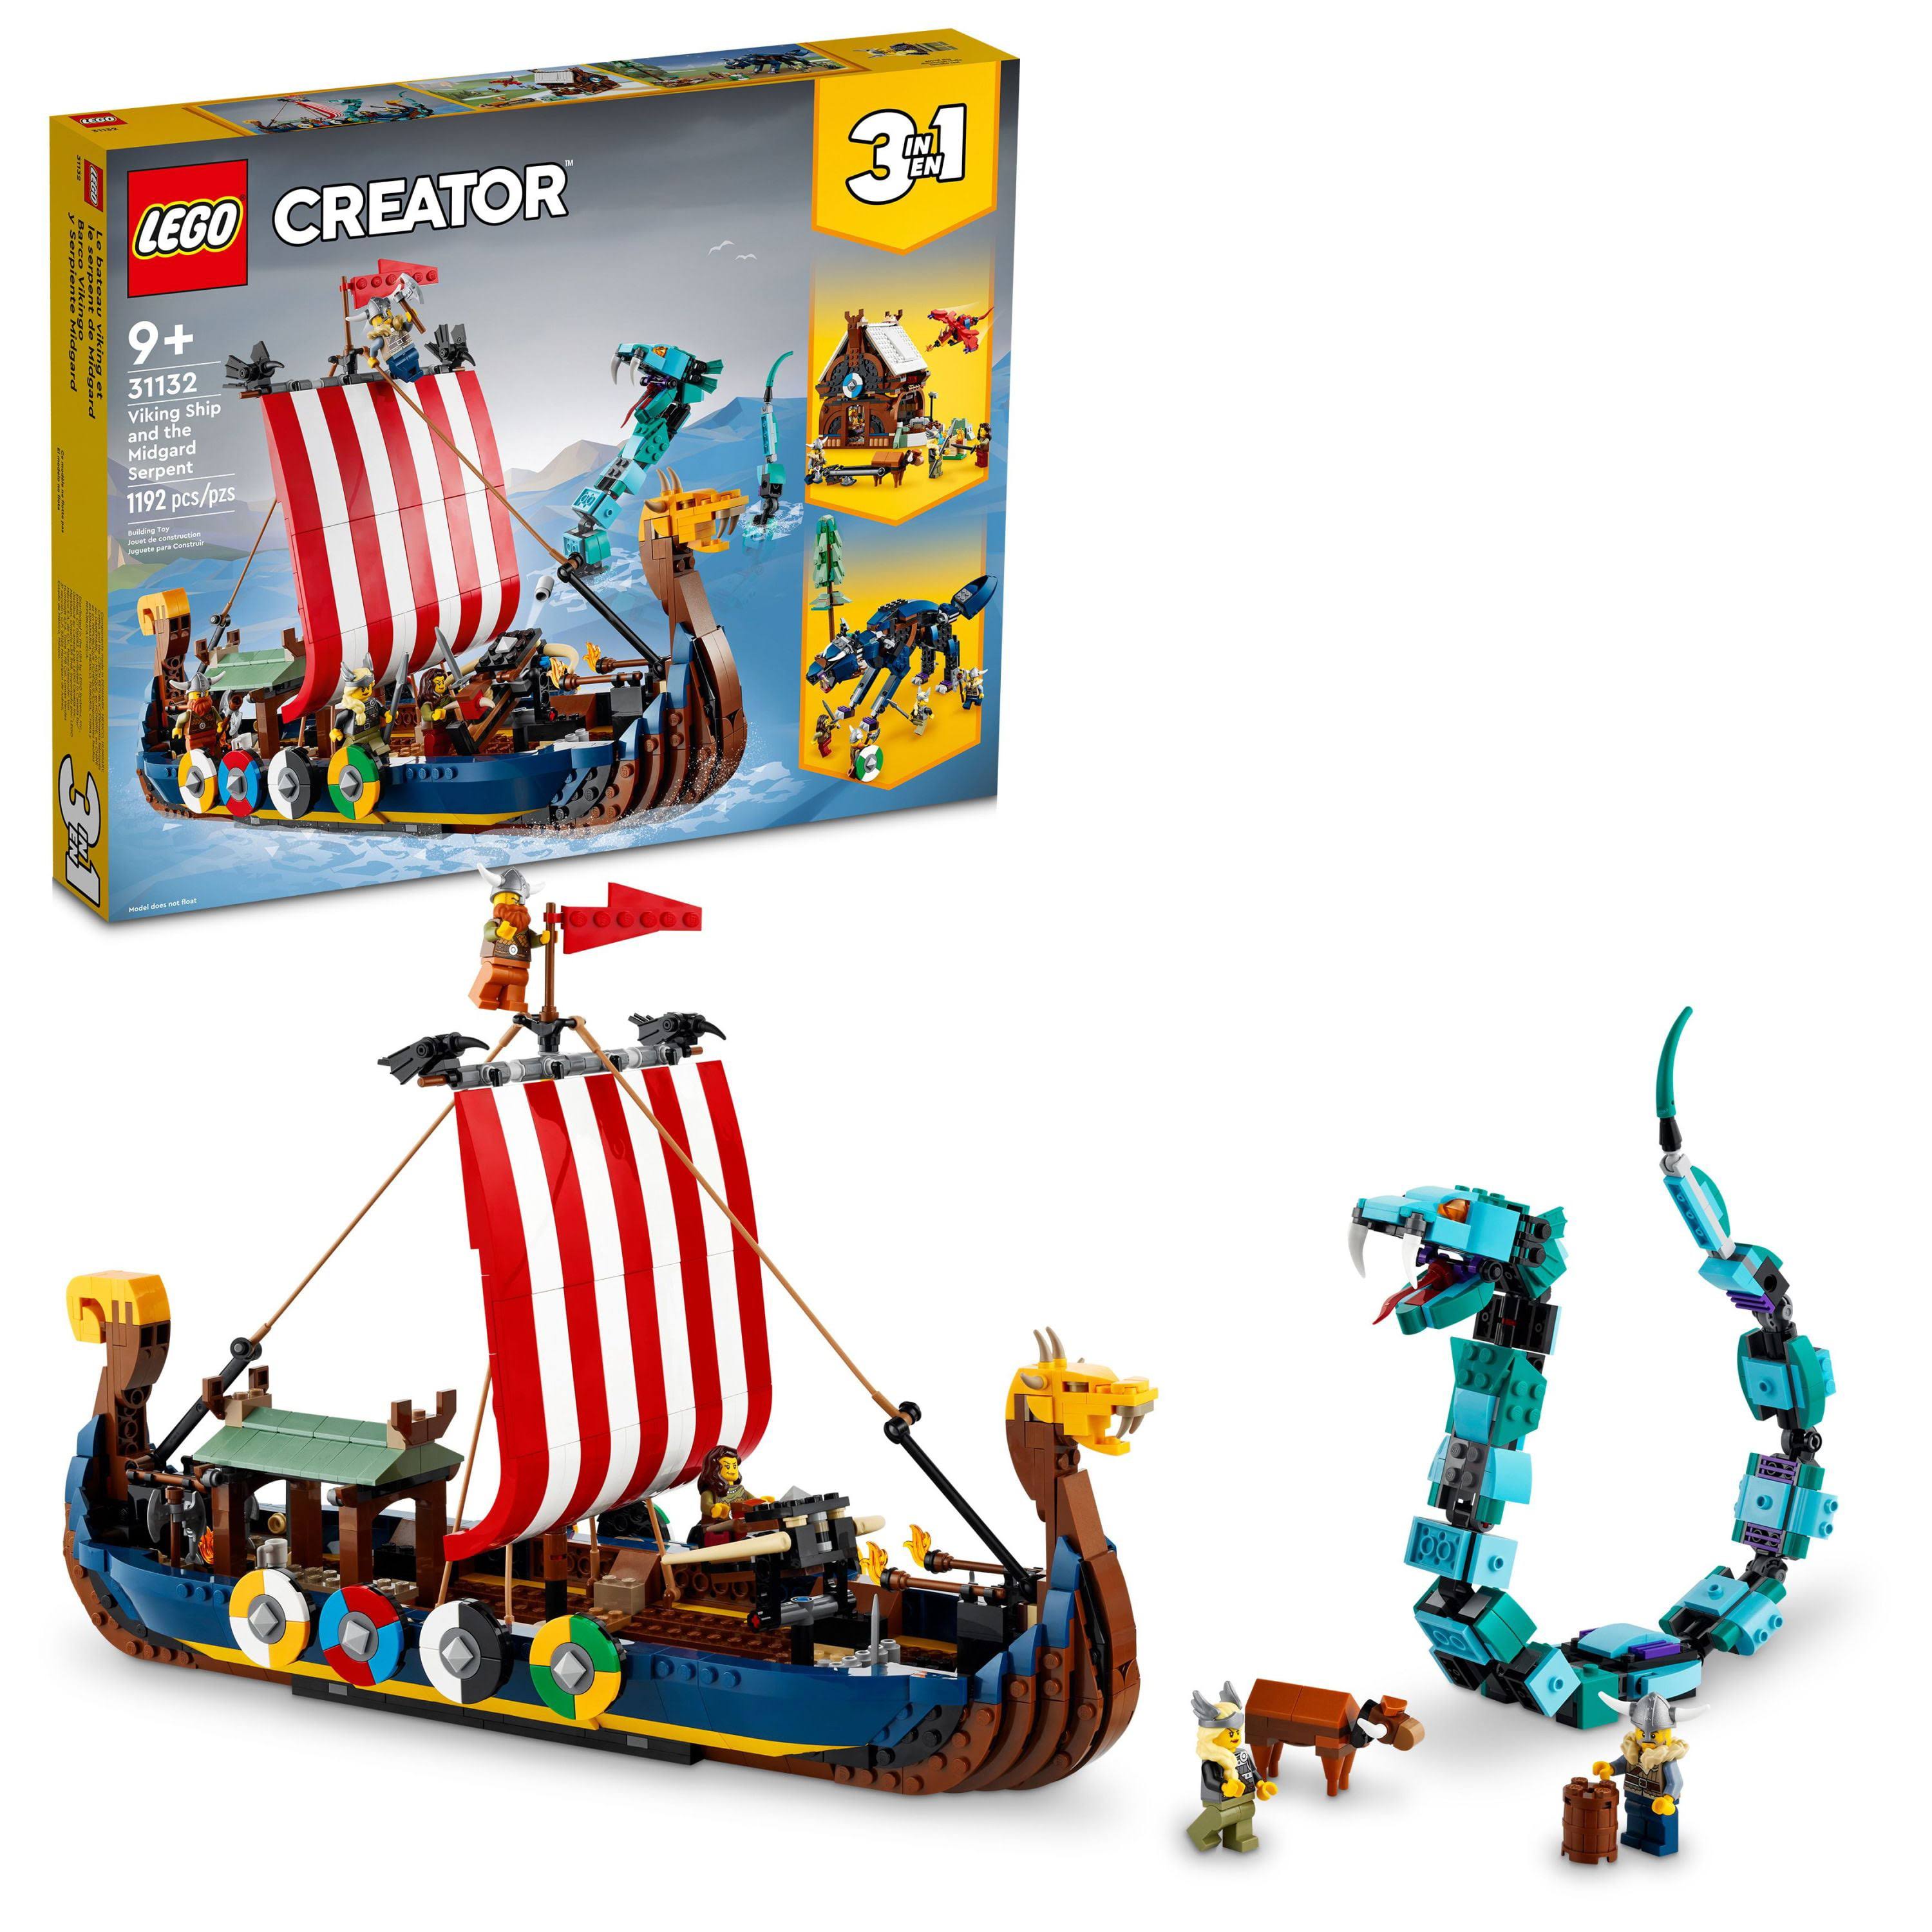 Lego 31132 Creator Viking Ship and The Midgard Serpent